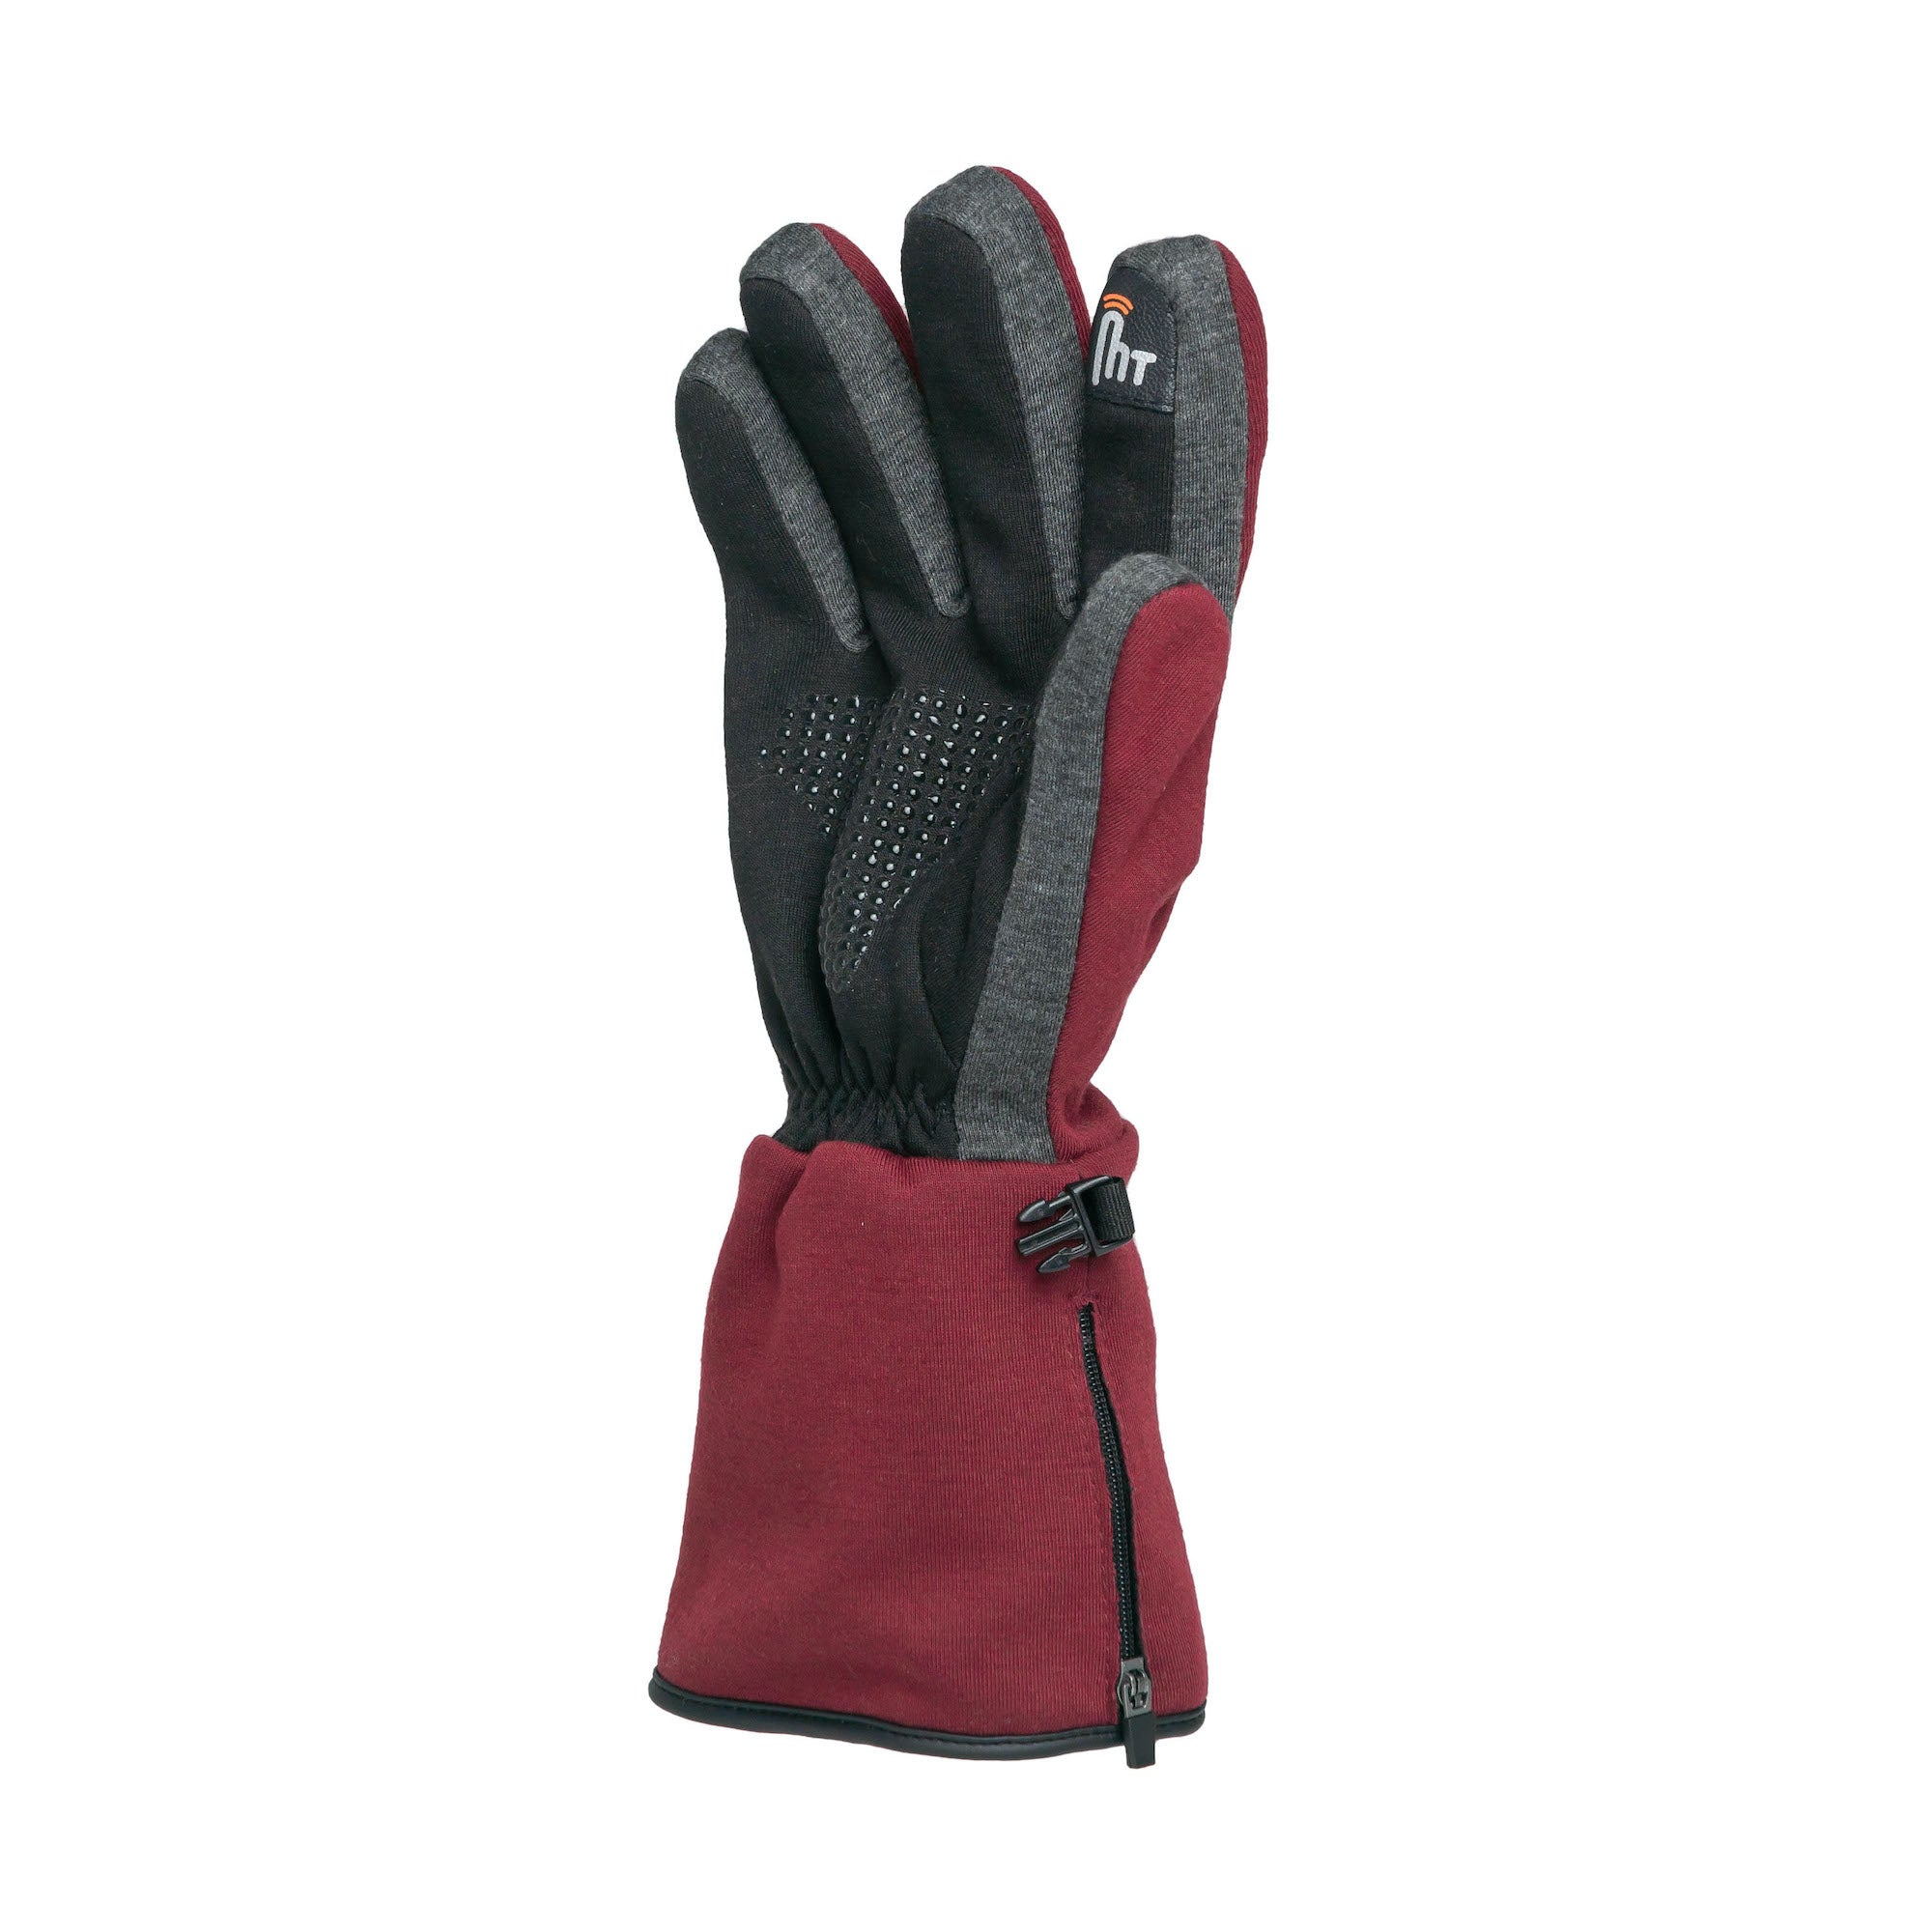 Thermal Heated Glove Women's